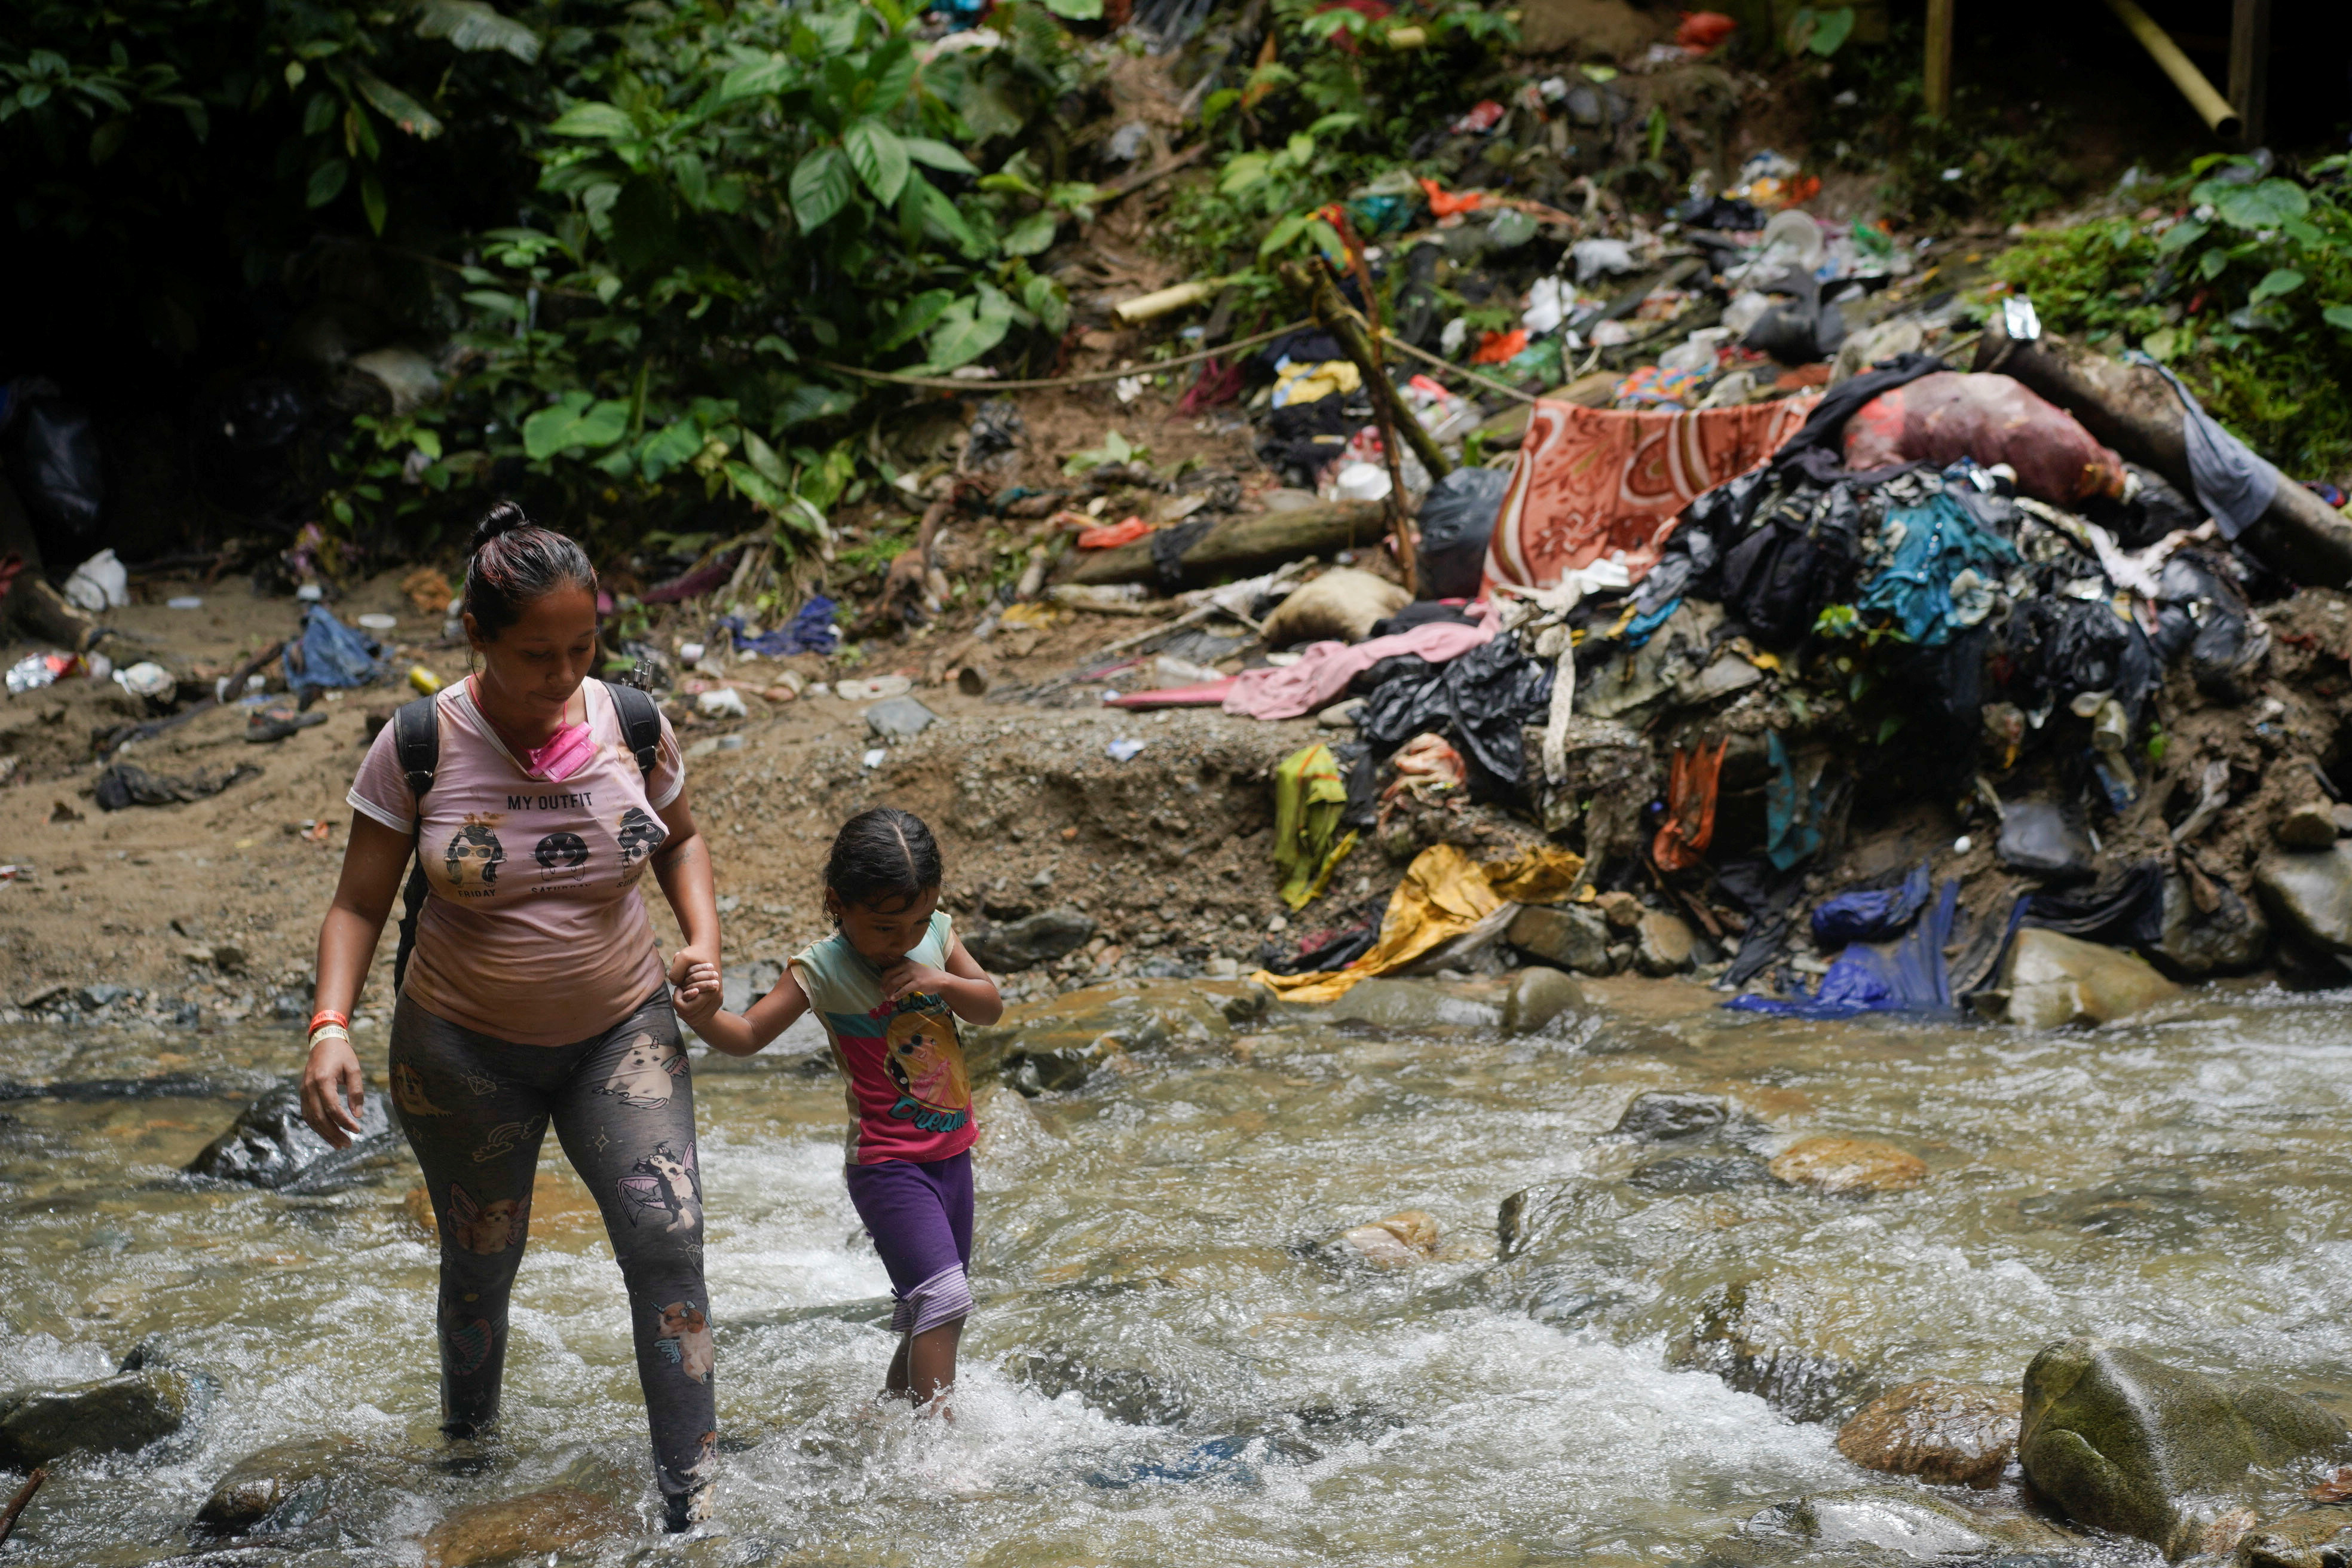 Tens of thousands of migrant children passed through Panama’s Darien Gap this year